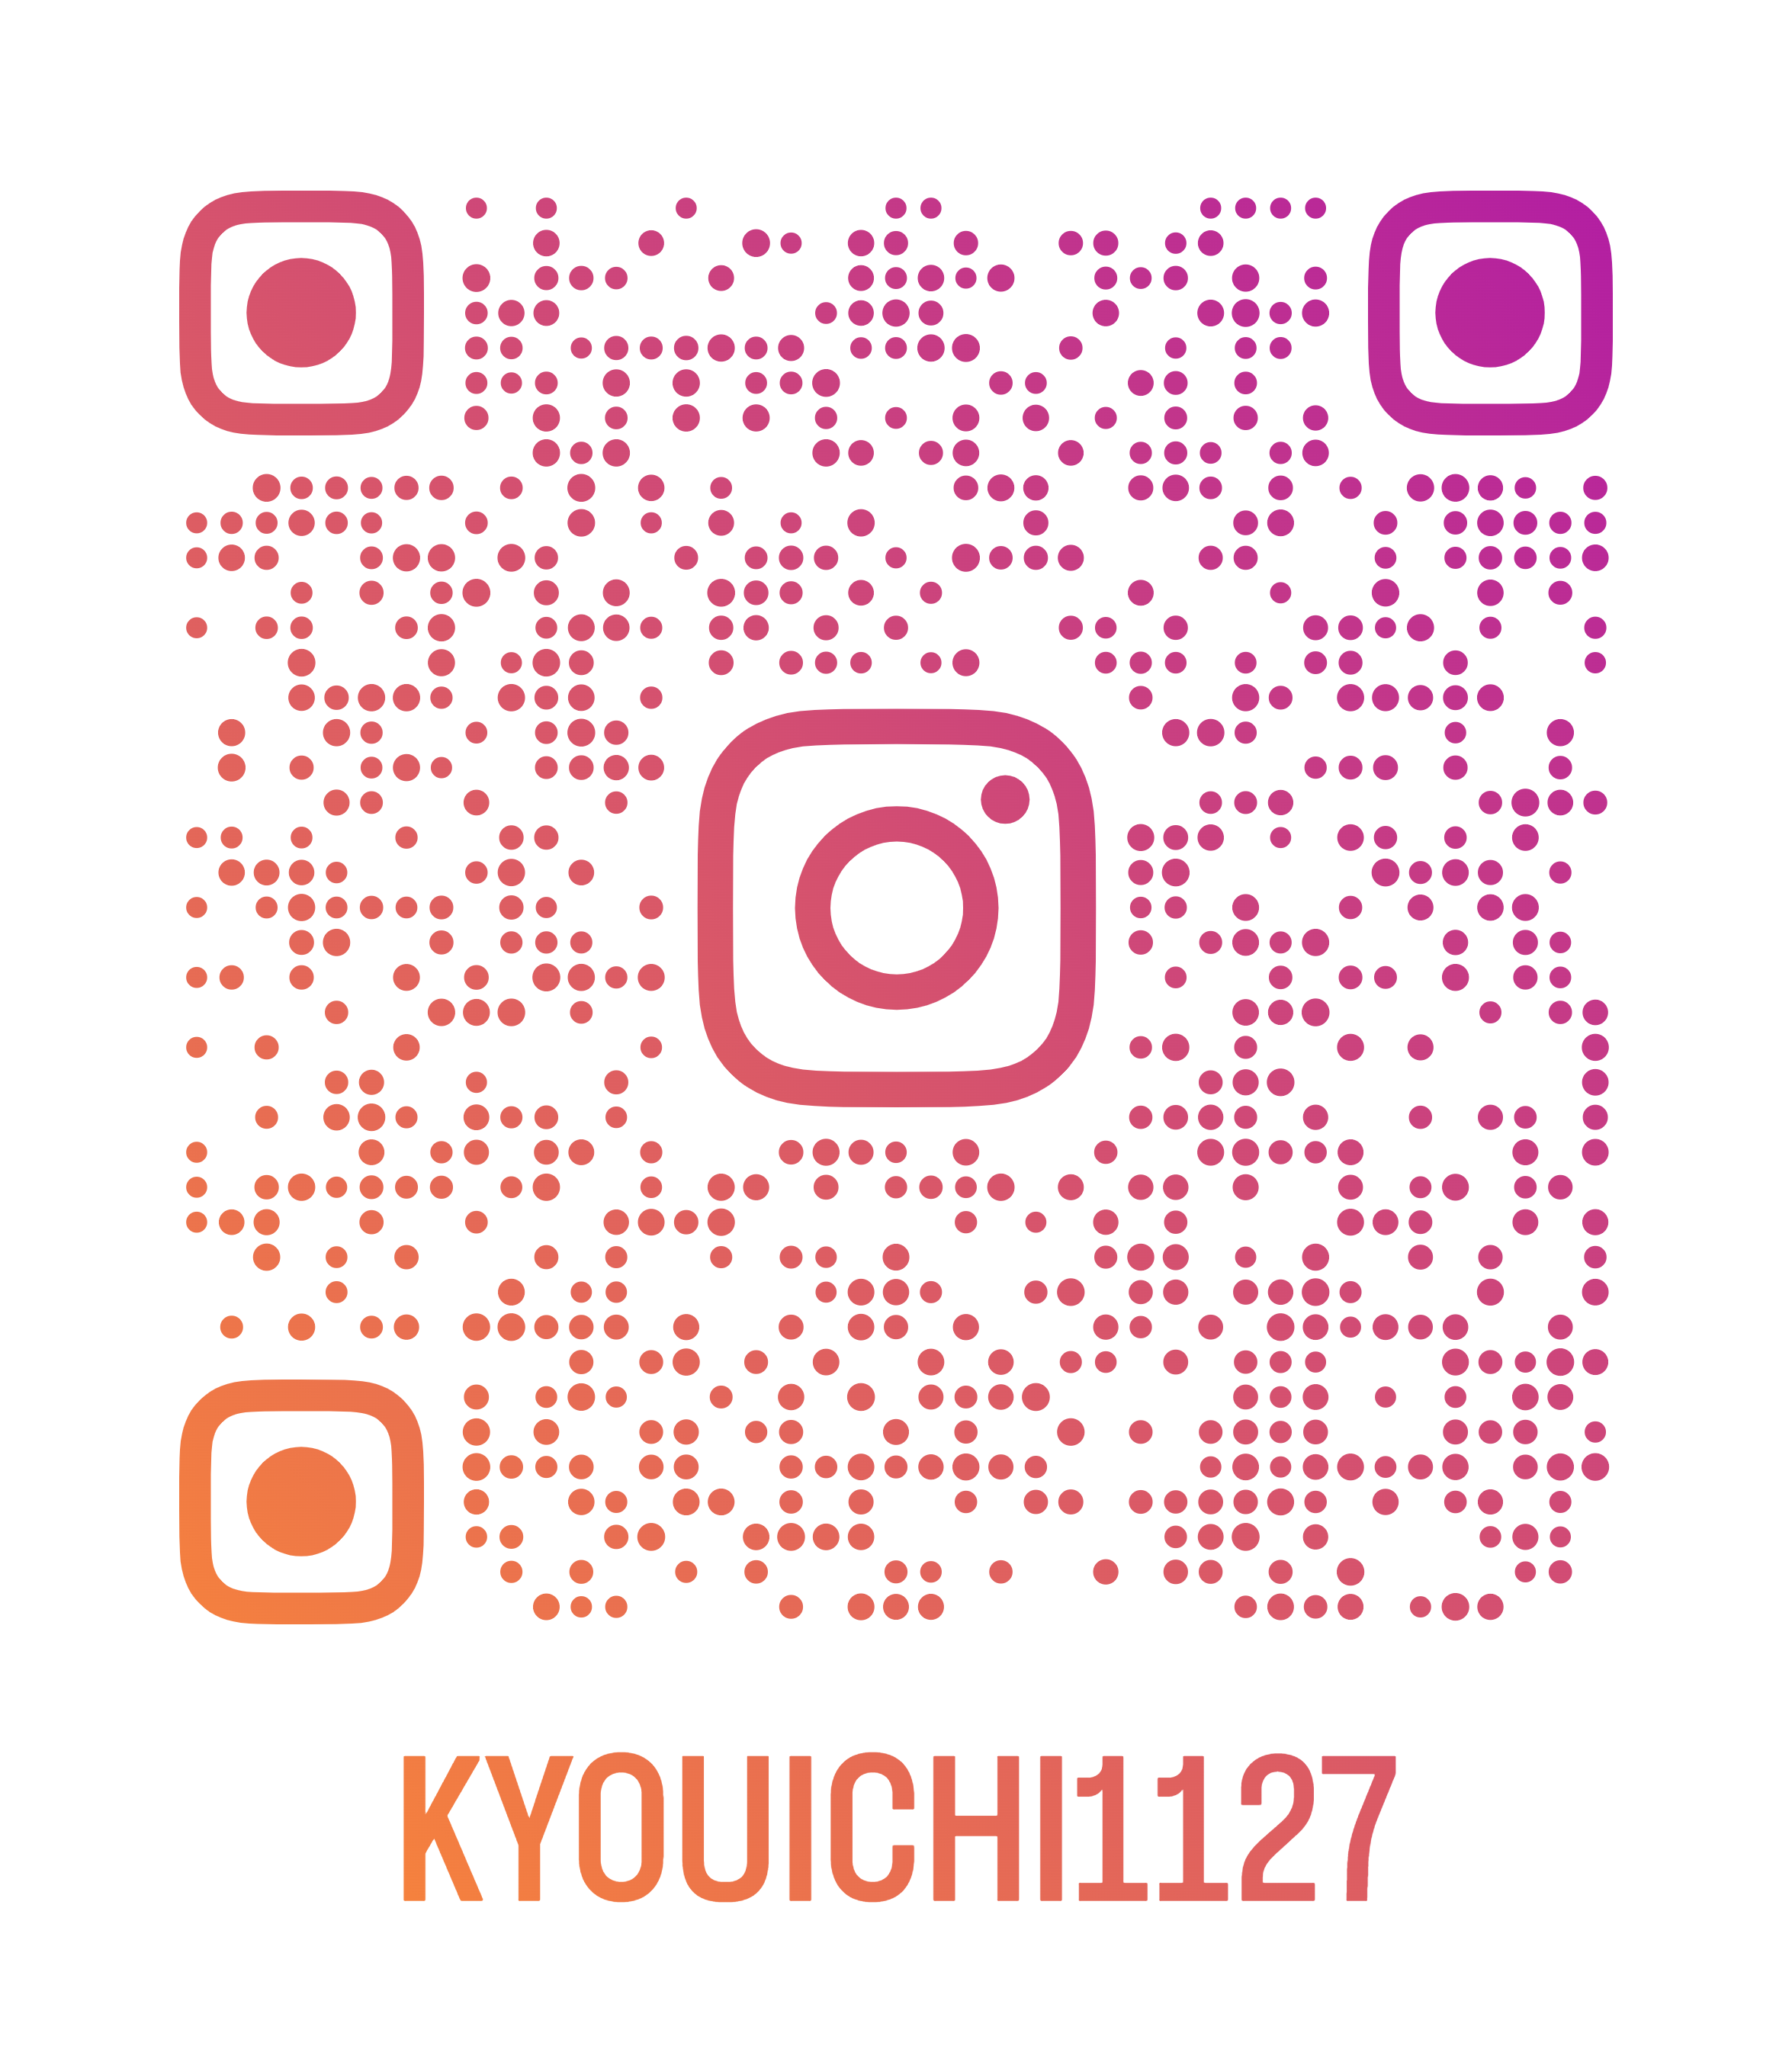 kyouichi1127_qr.png